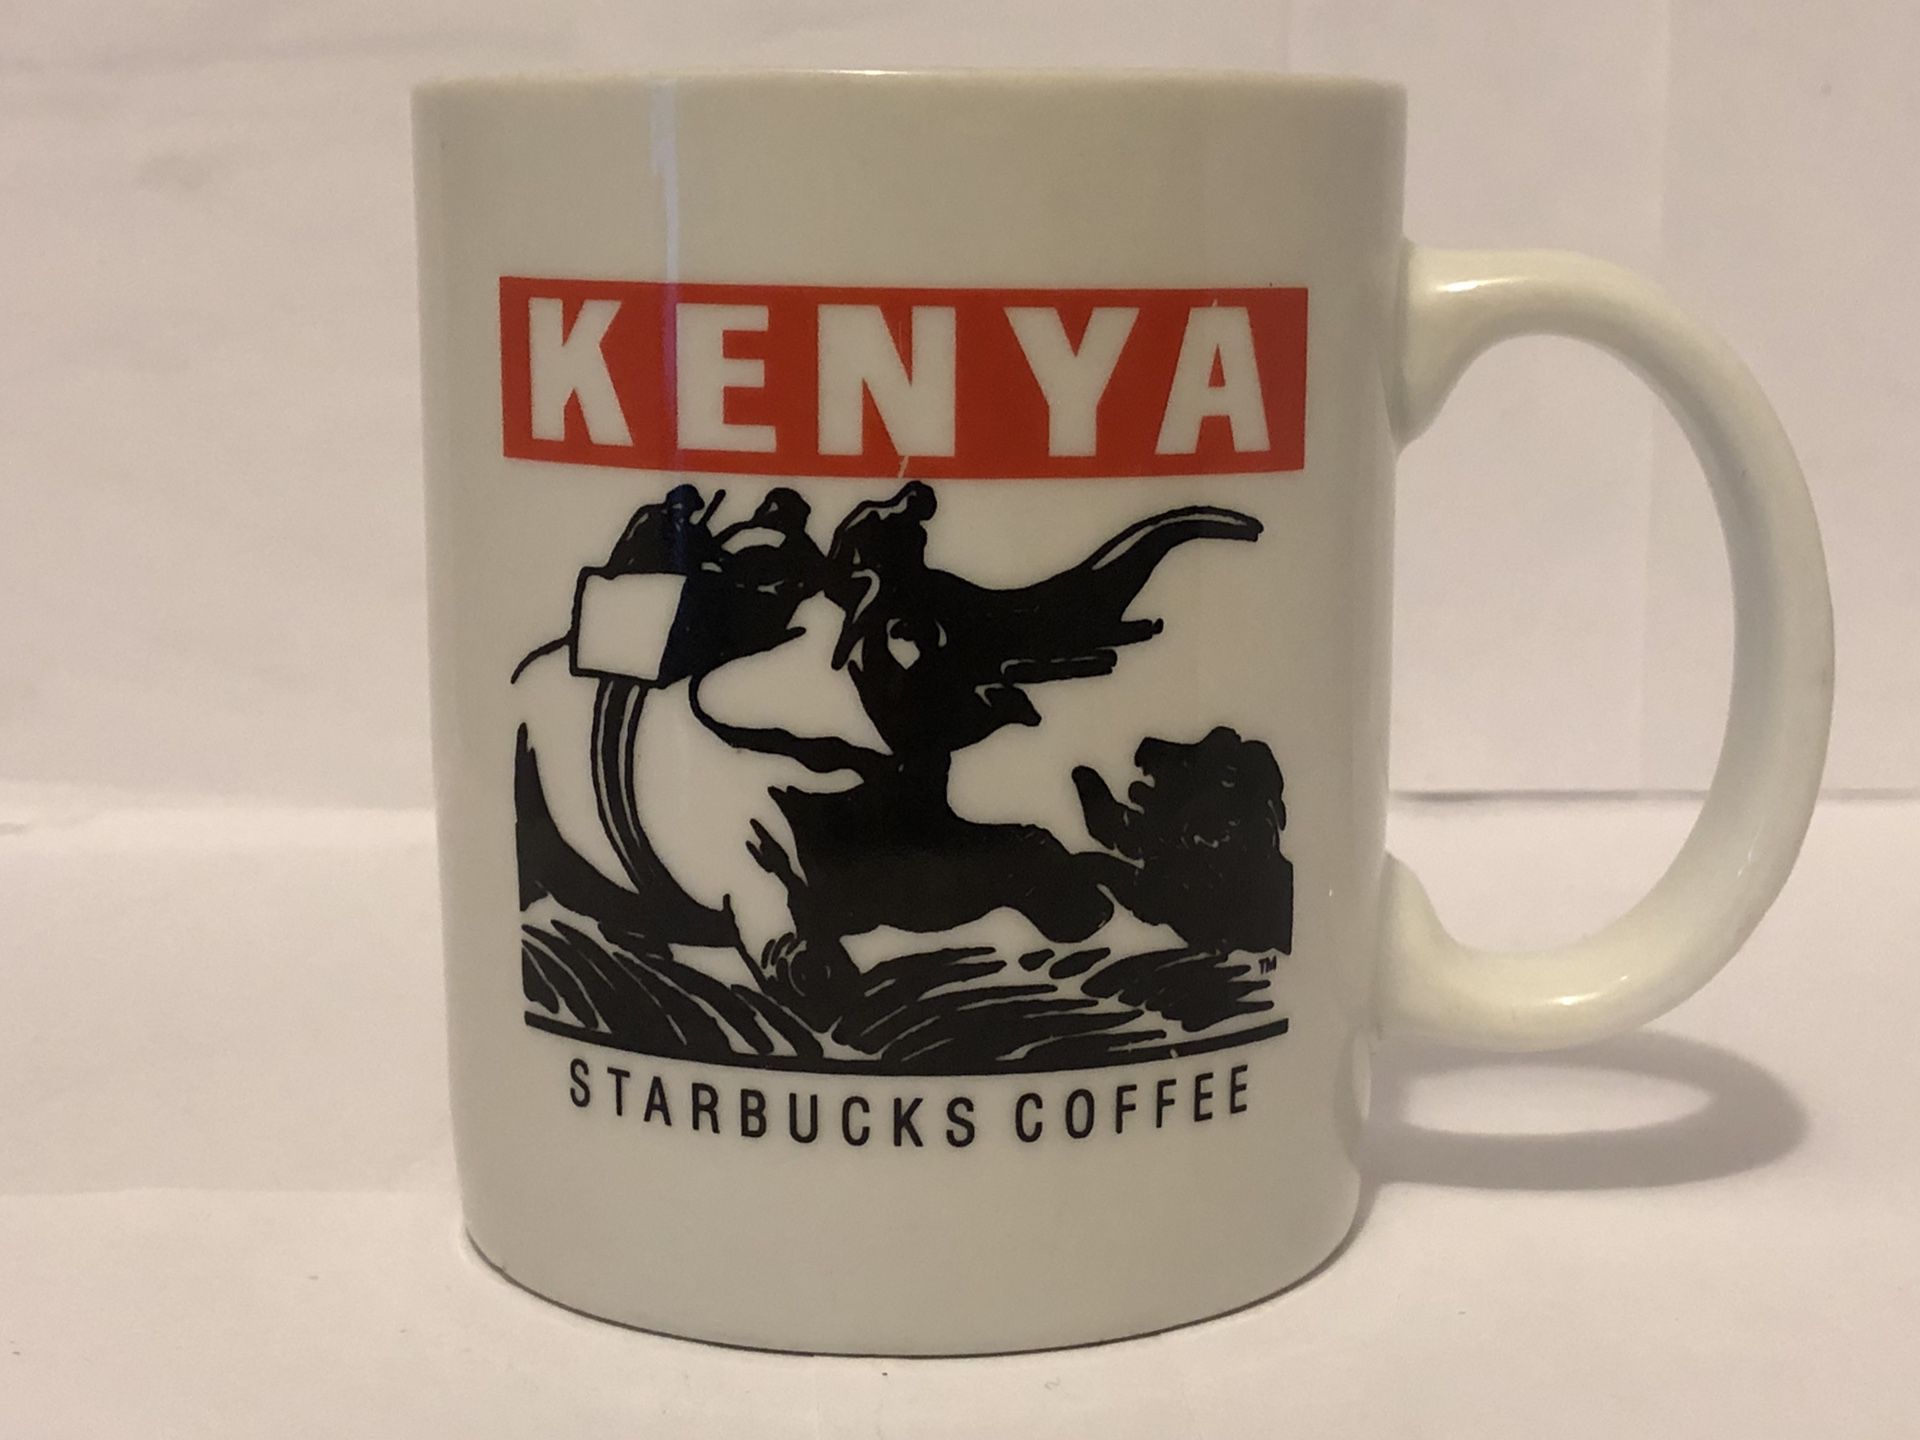 Starbucks Coffee Kenya Coffee Mug